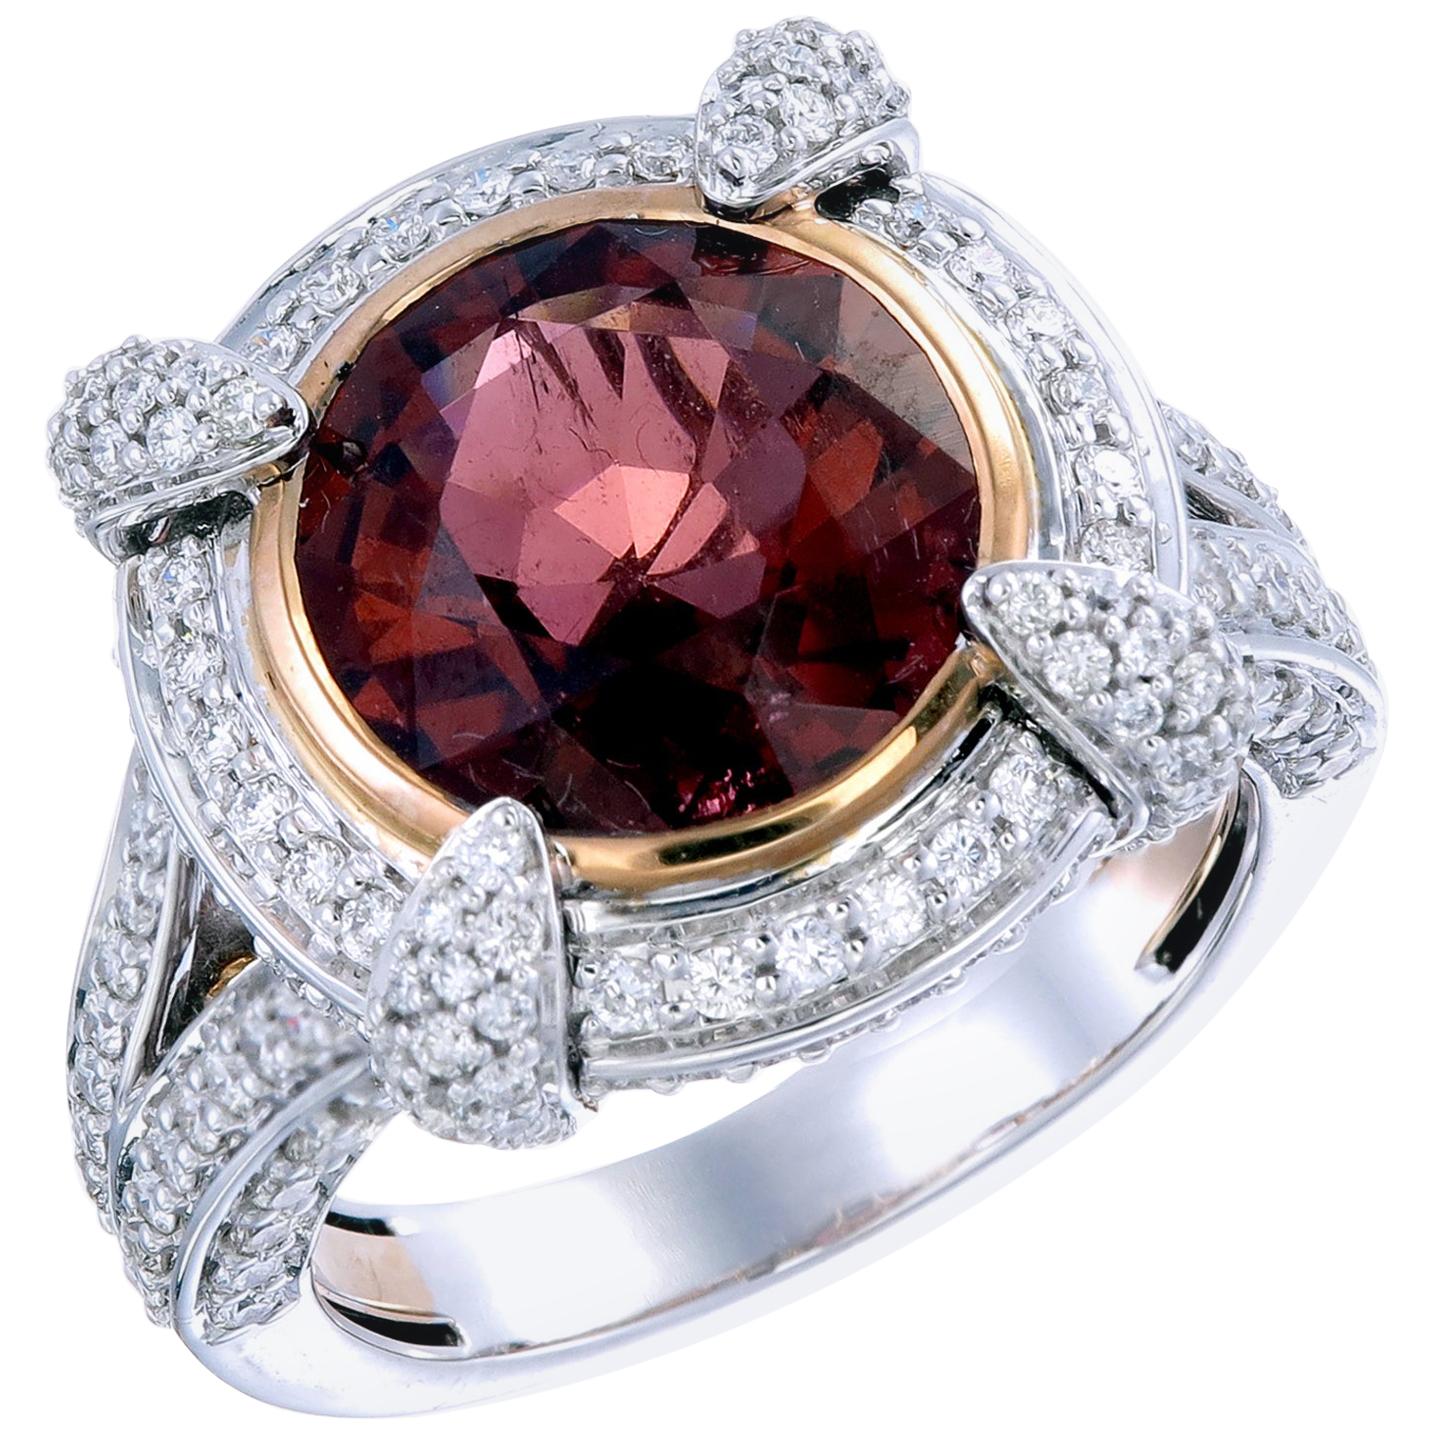 Zorab Creation Sangria-Ring mit 4,81 Karat rotem Turmalin und Diamant